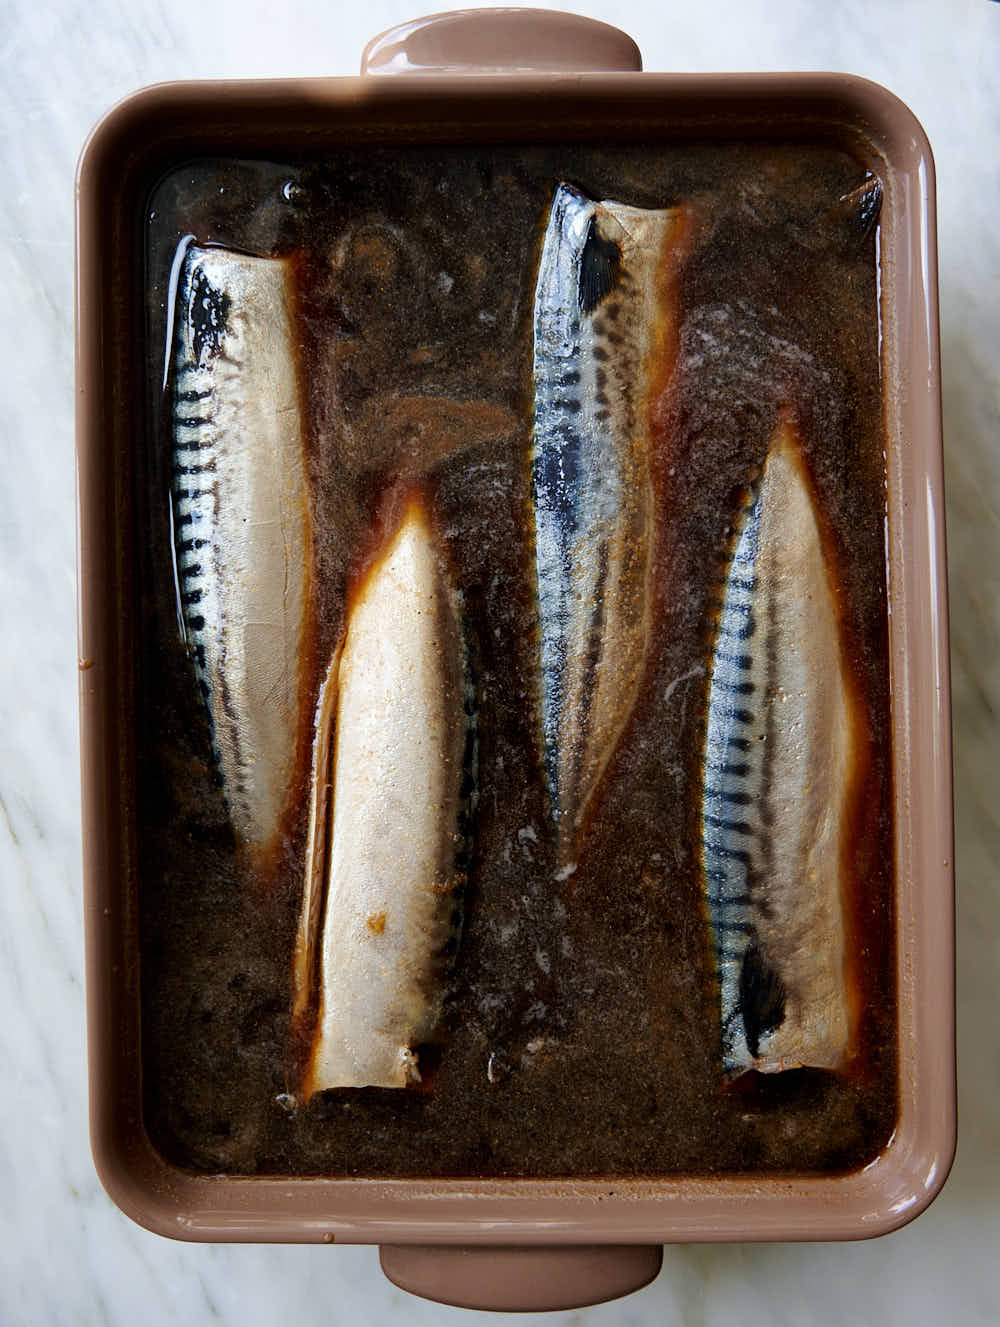 Brining mackerel in seasoned brine before smoking